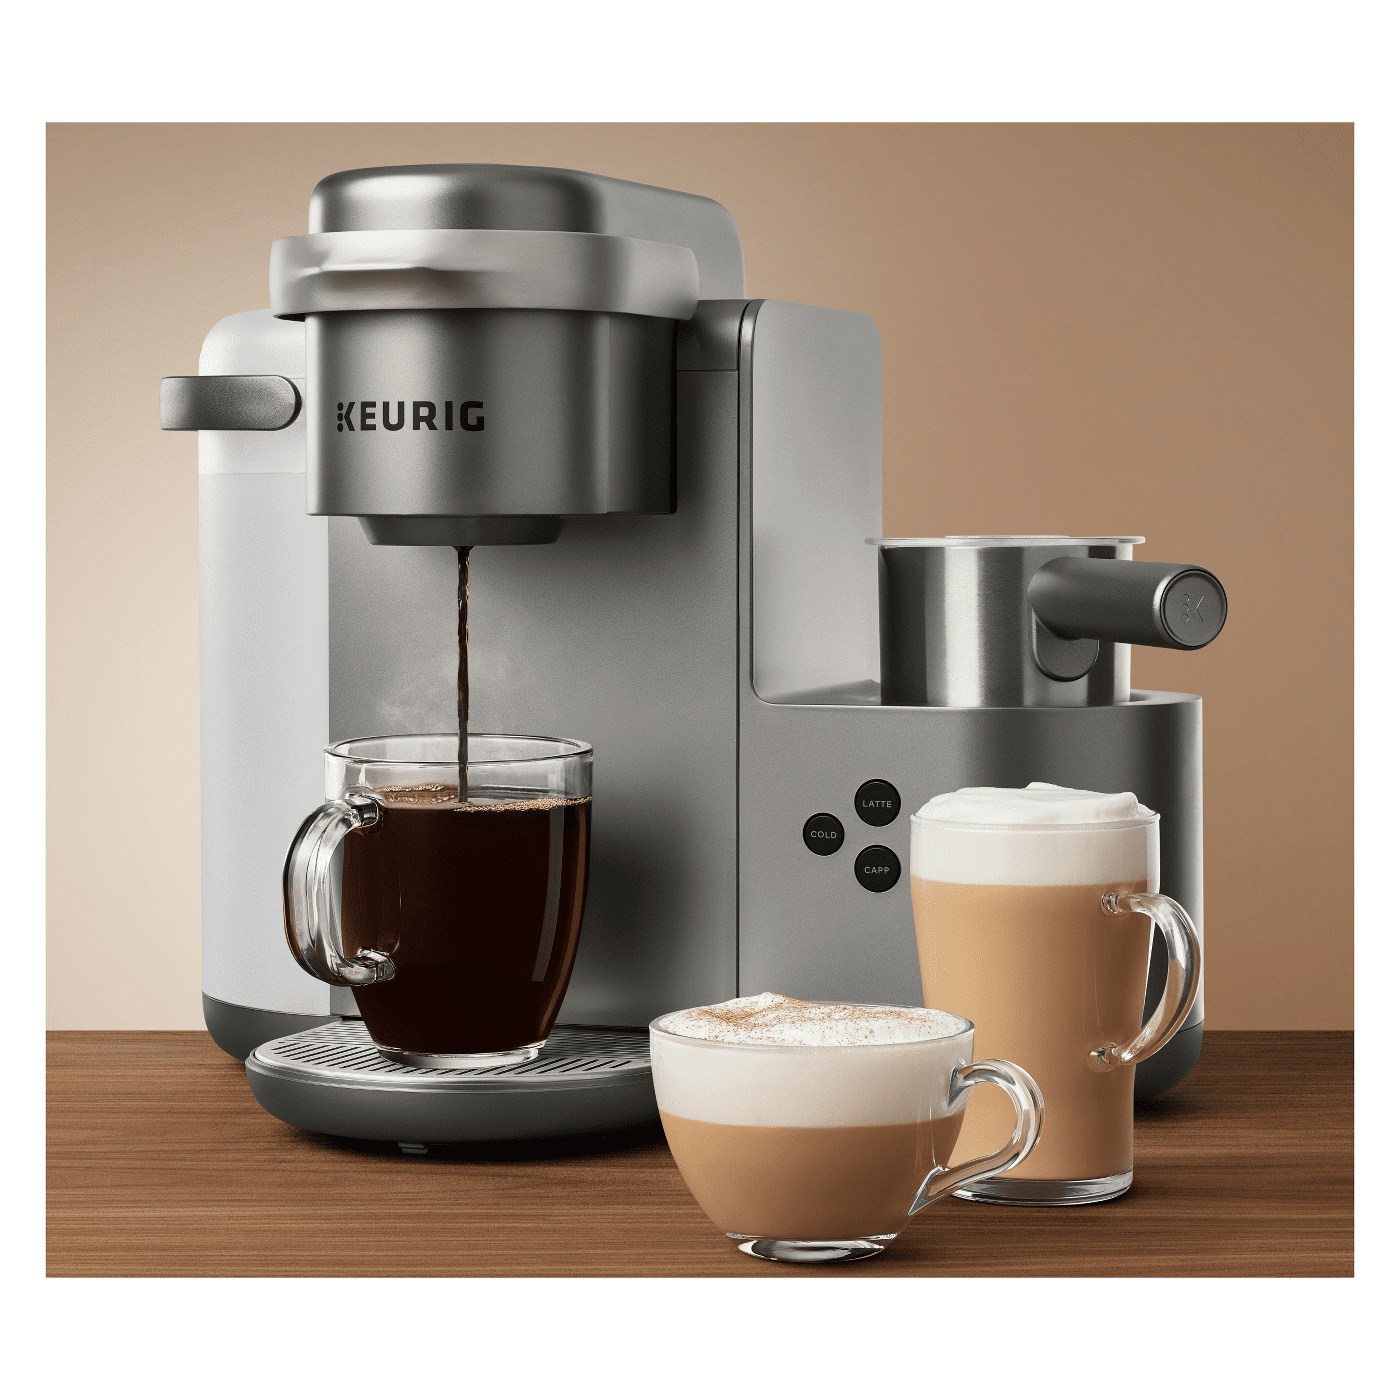 Keurig latte maker pouring coffee next to two prepared lattes